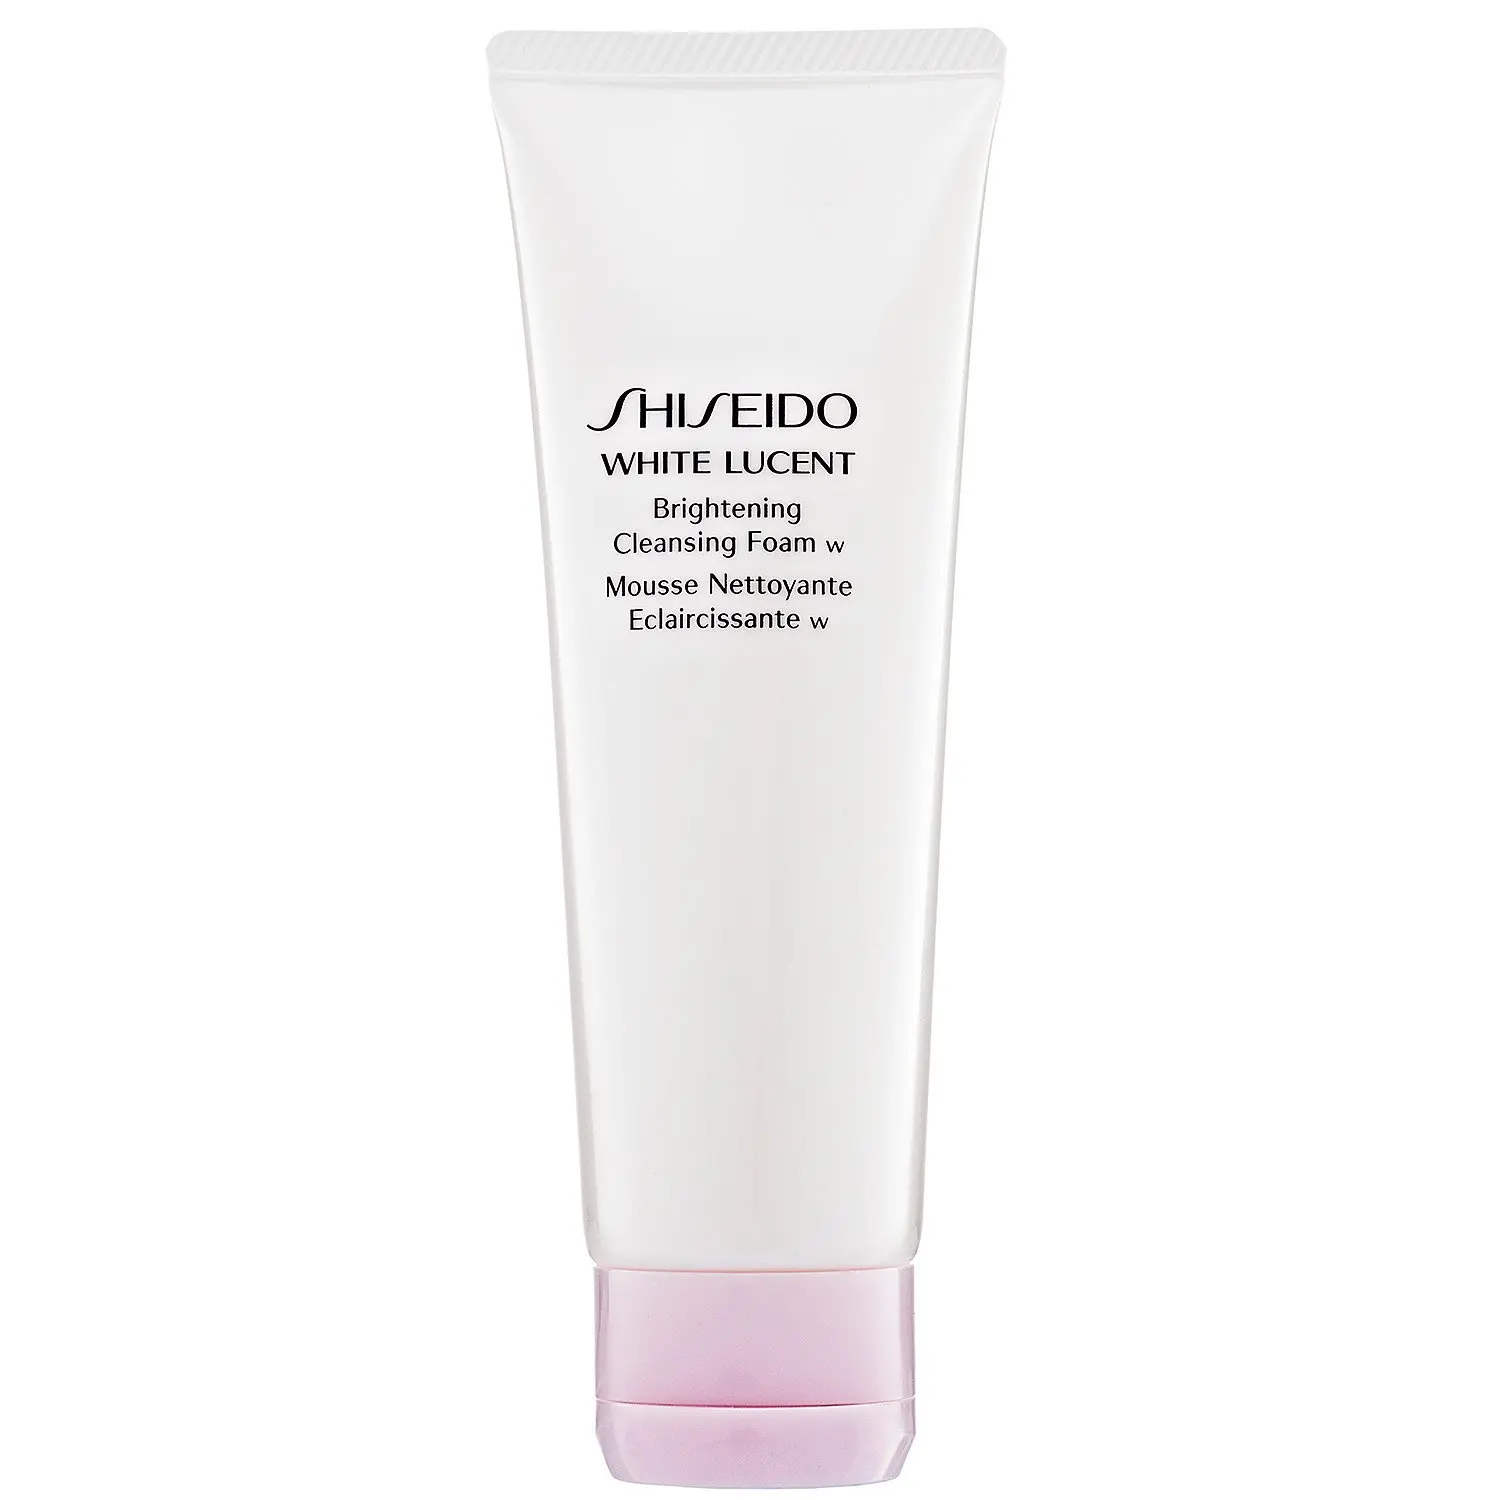 Шисейдо White Lucent. Shiseido Cleansing Foam. Whitening умывалка. Brightening Cleansing Gel Sealux. Brightening cleanser